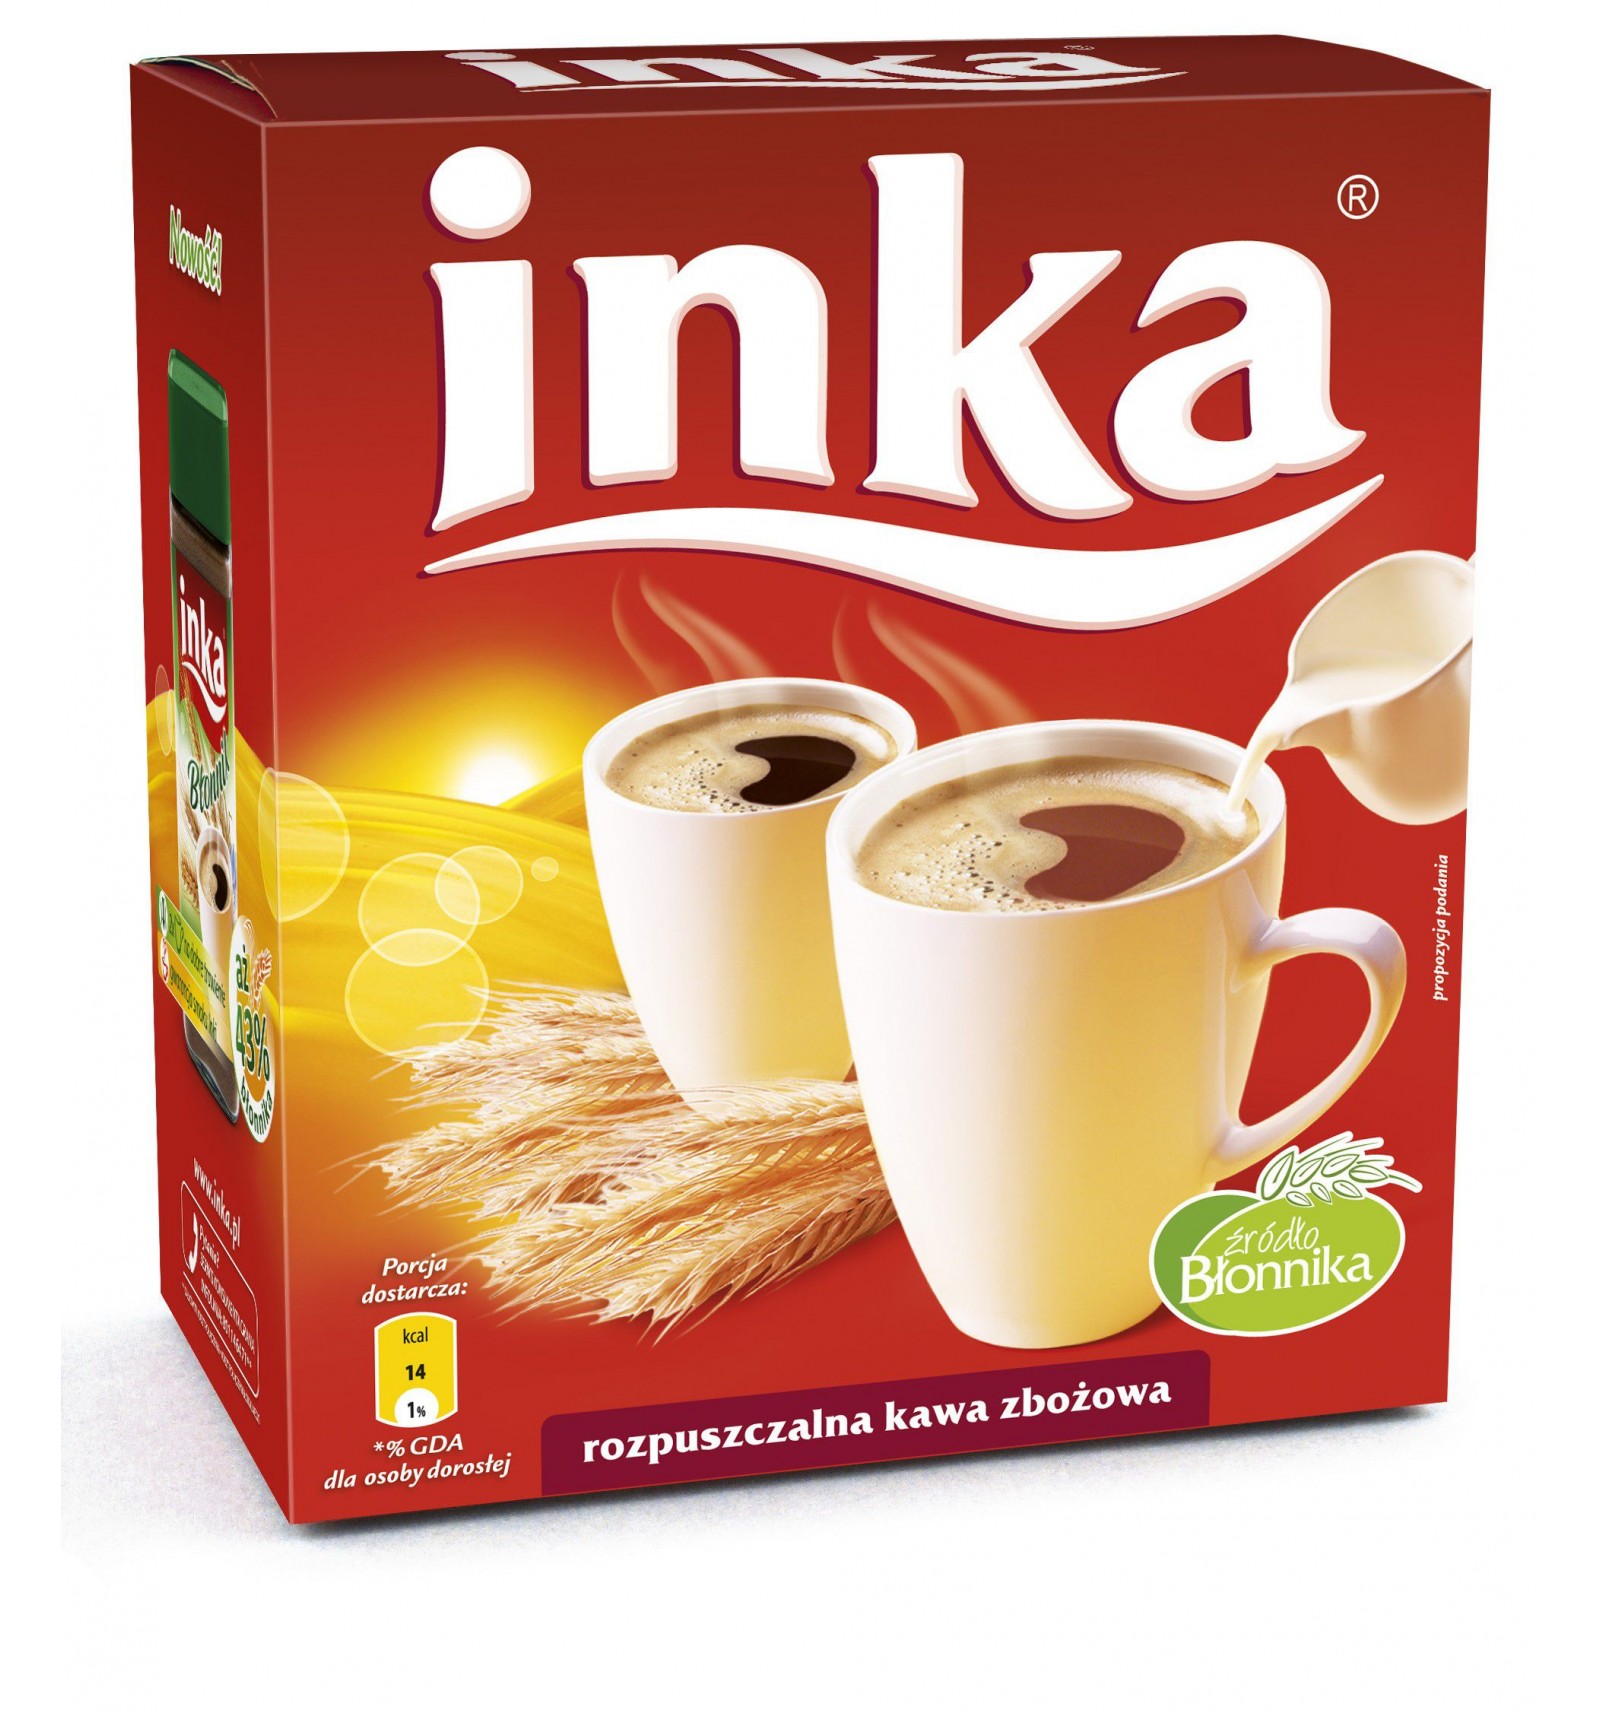 Inka kawa zbozowa 150g